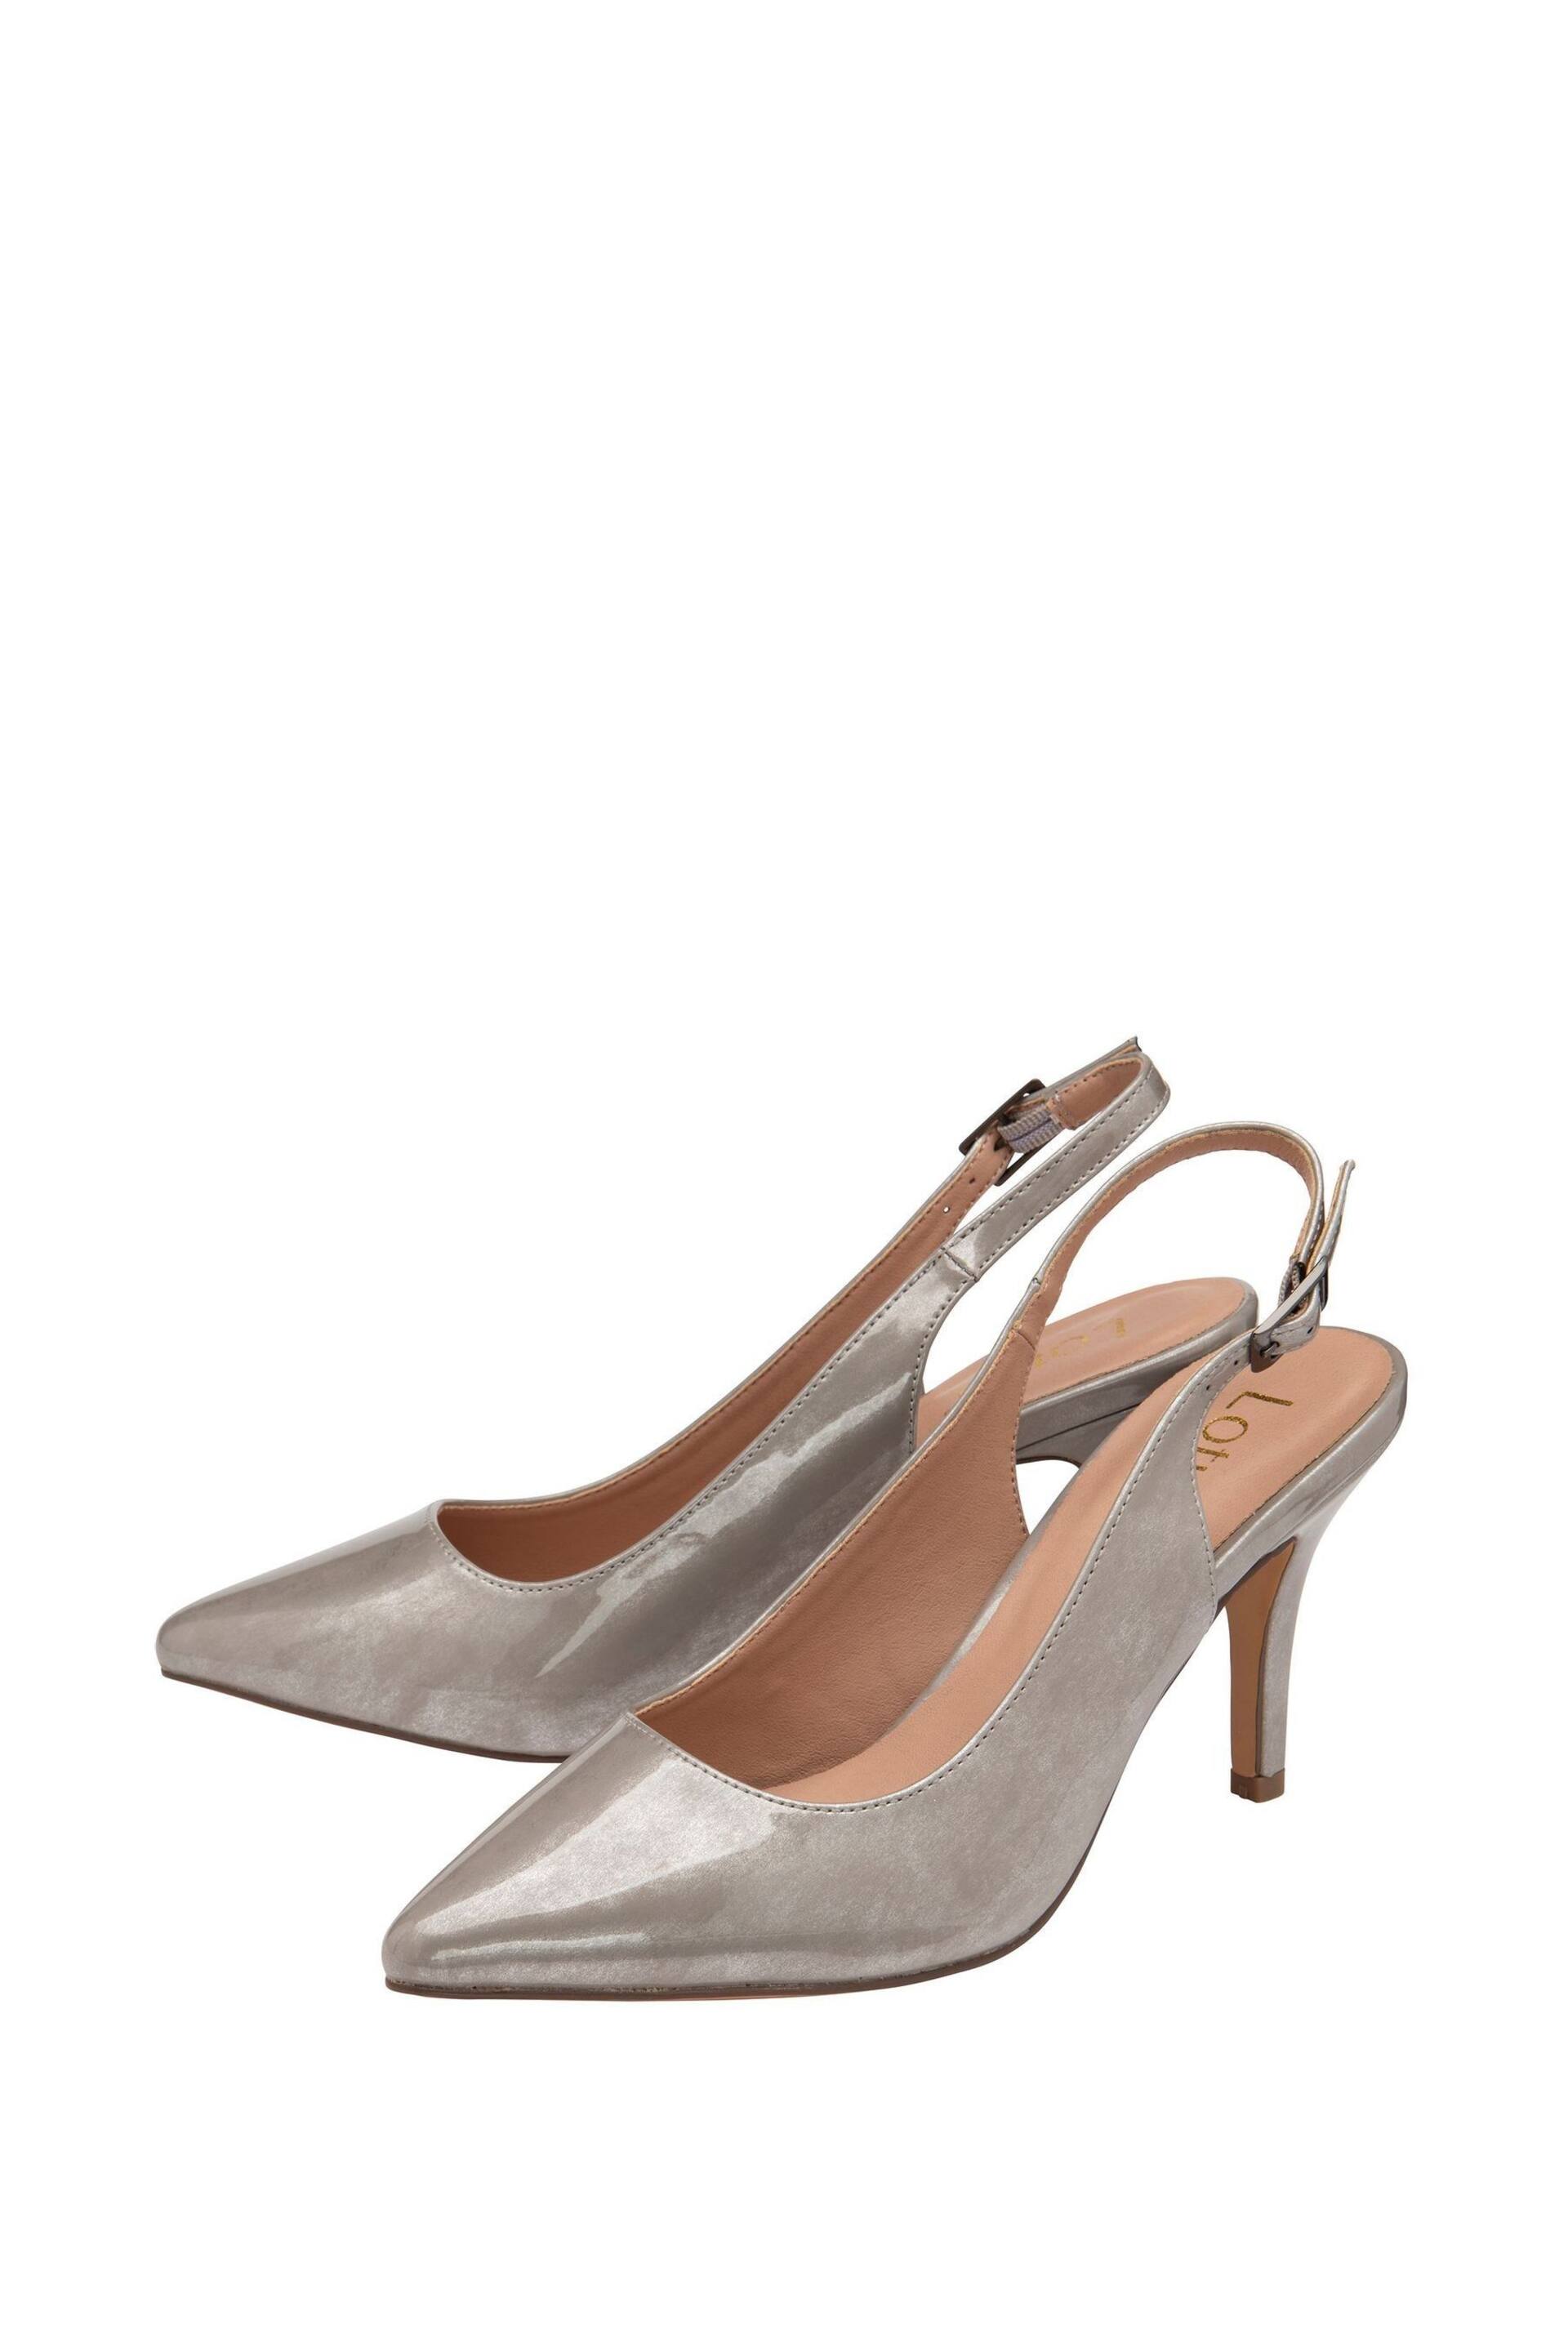 Lotus Grey Slingback Court Shoes - Image 2 of 4